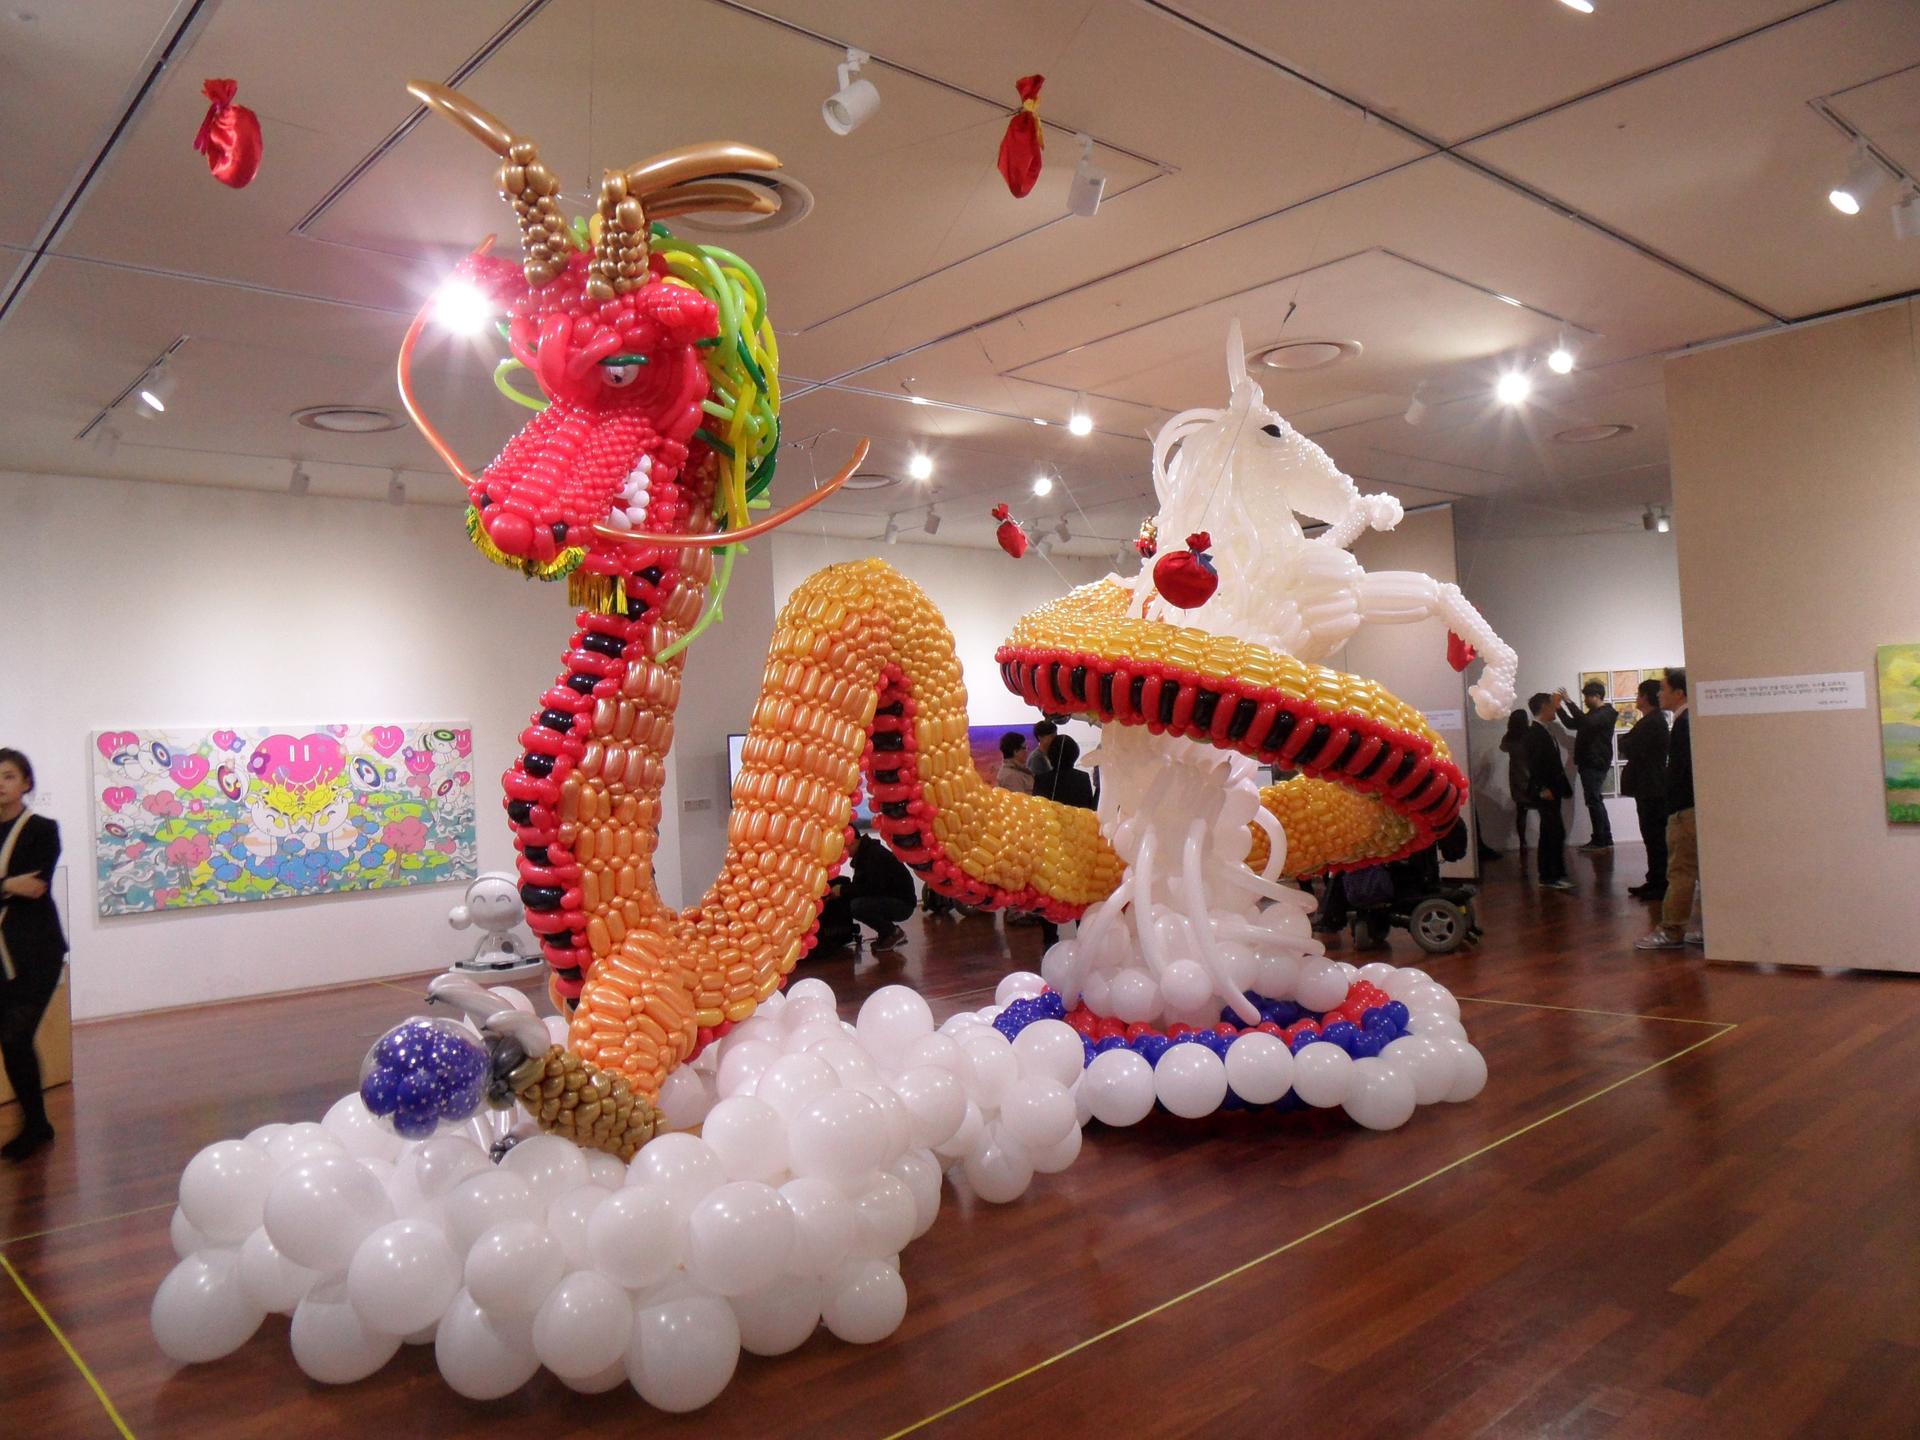 a balloon sculpture of a dragon and unicorn